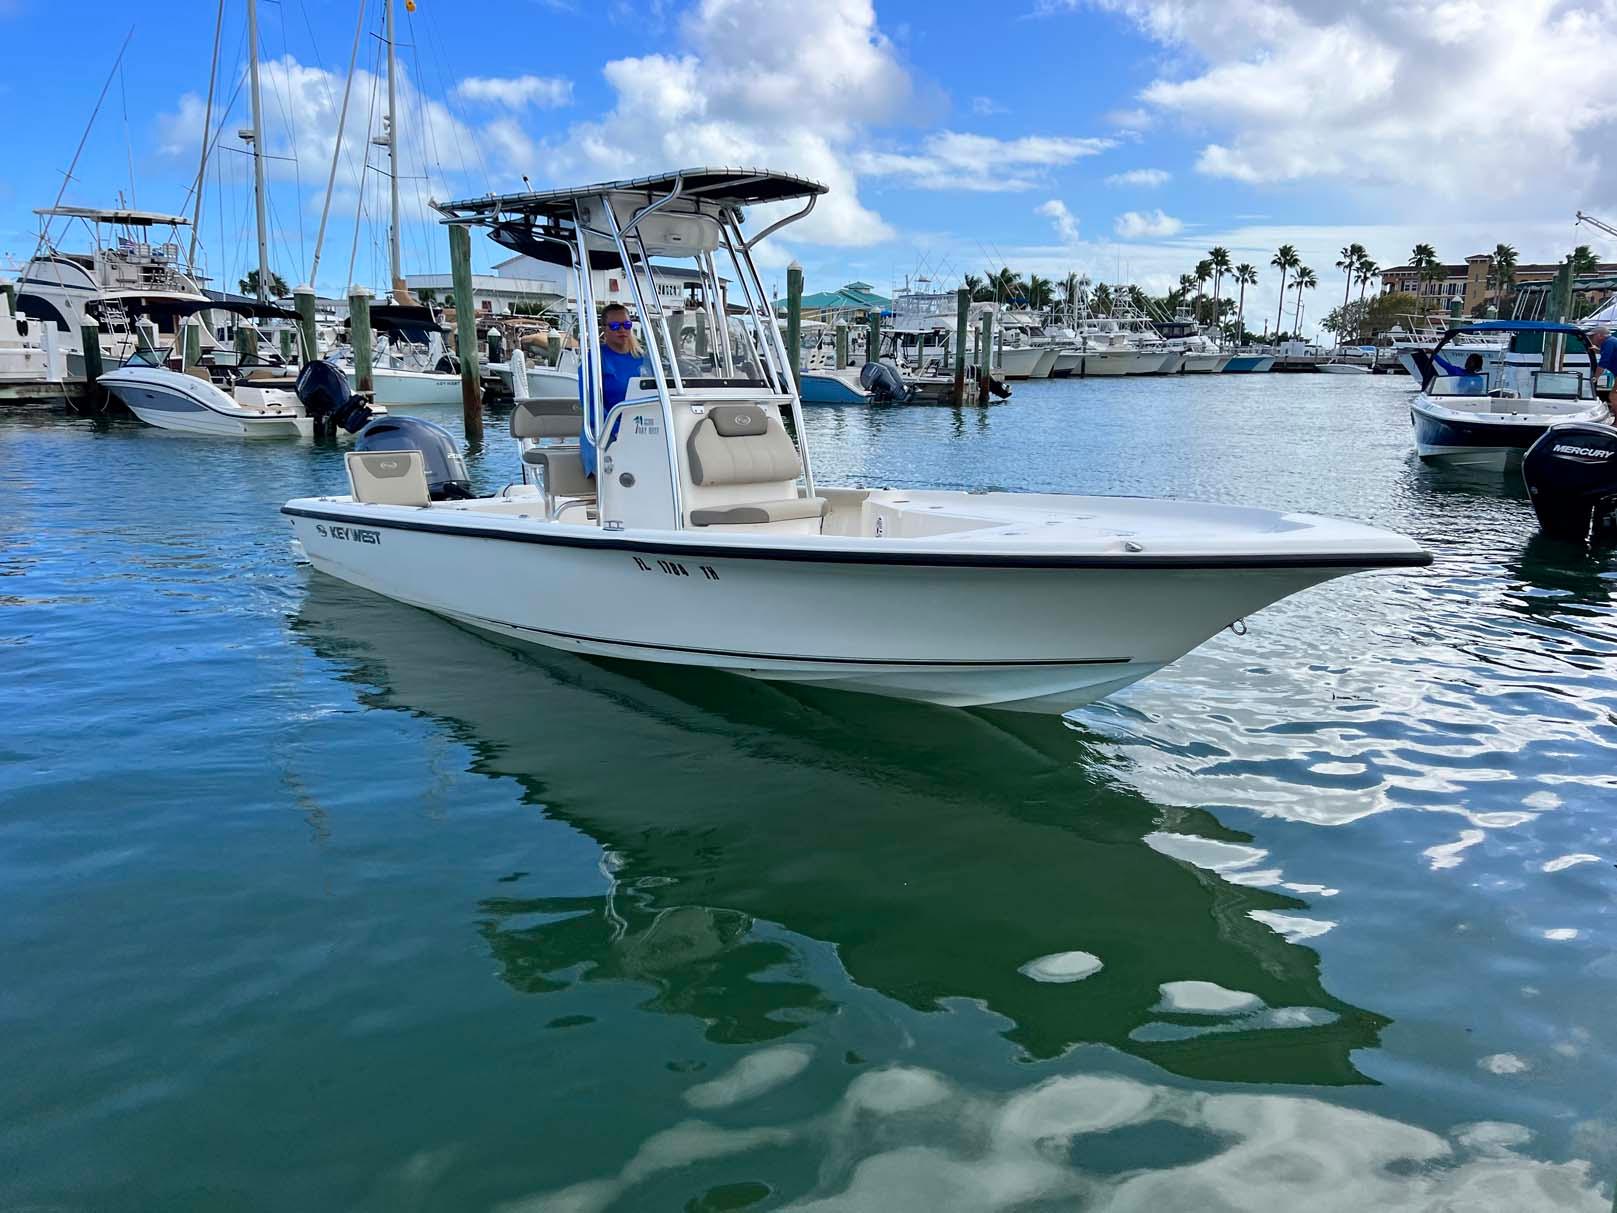 Boat Supplies, Fishing Gear & More - Fort Pierce, FL 34950